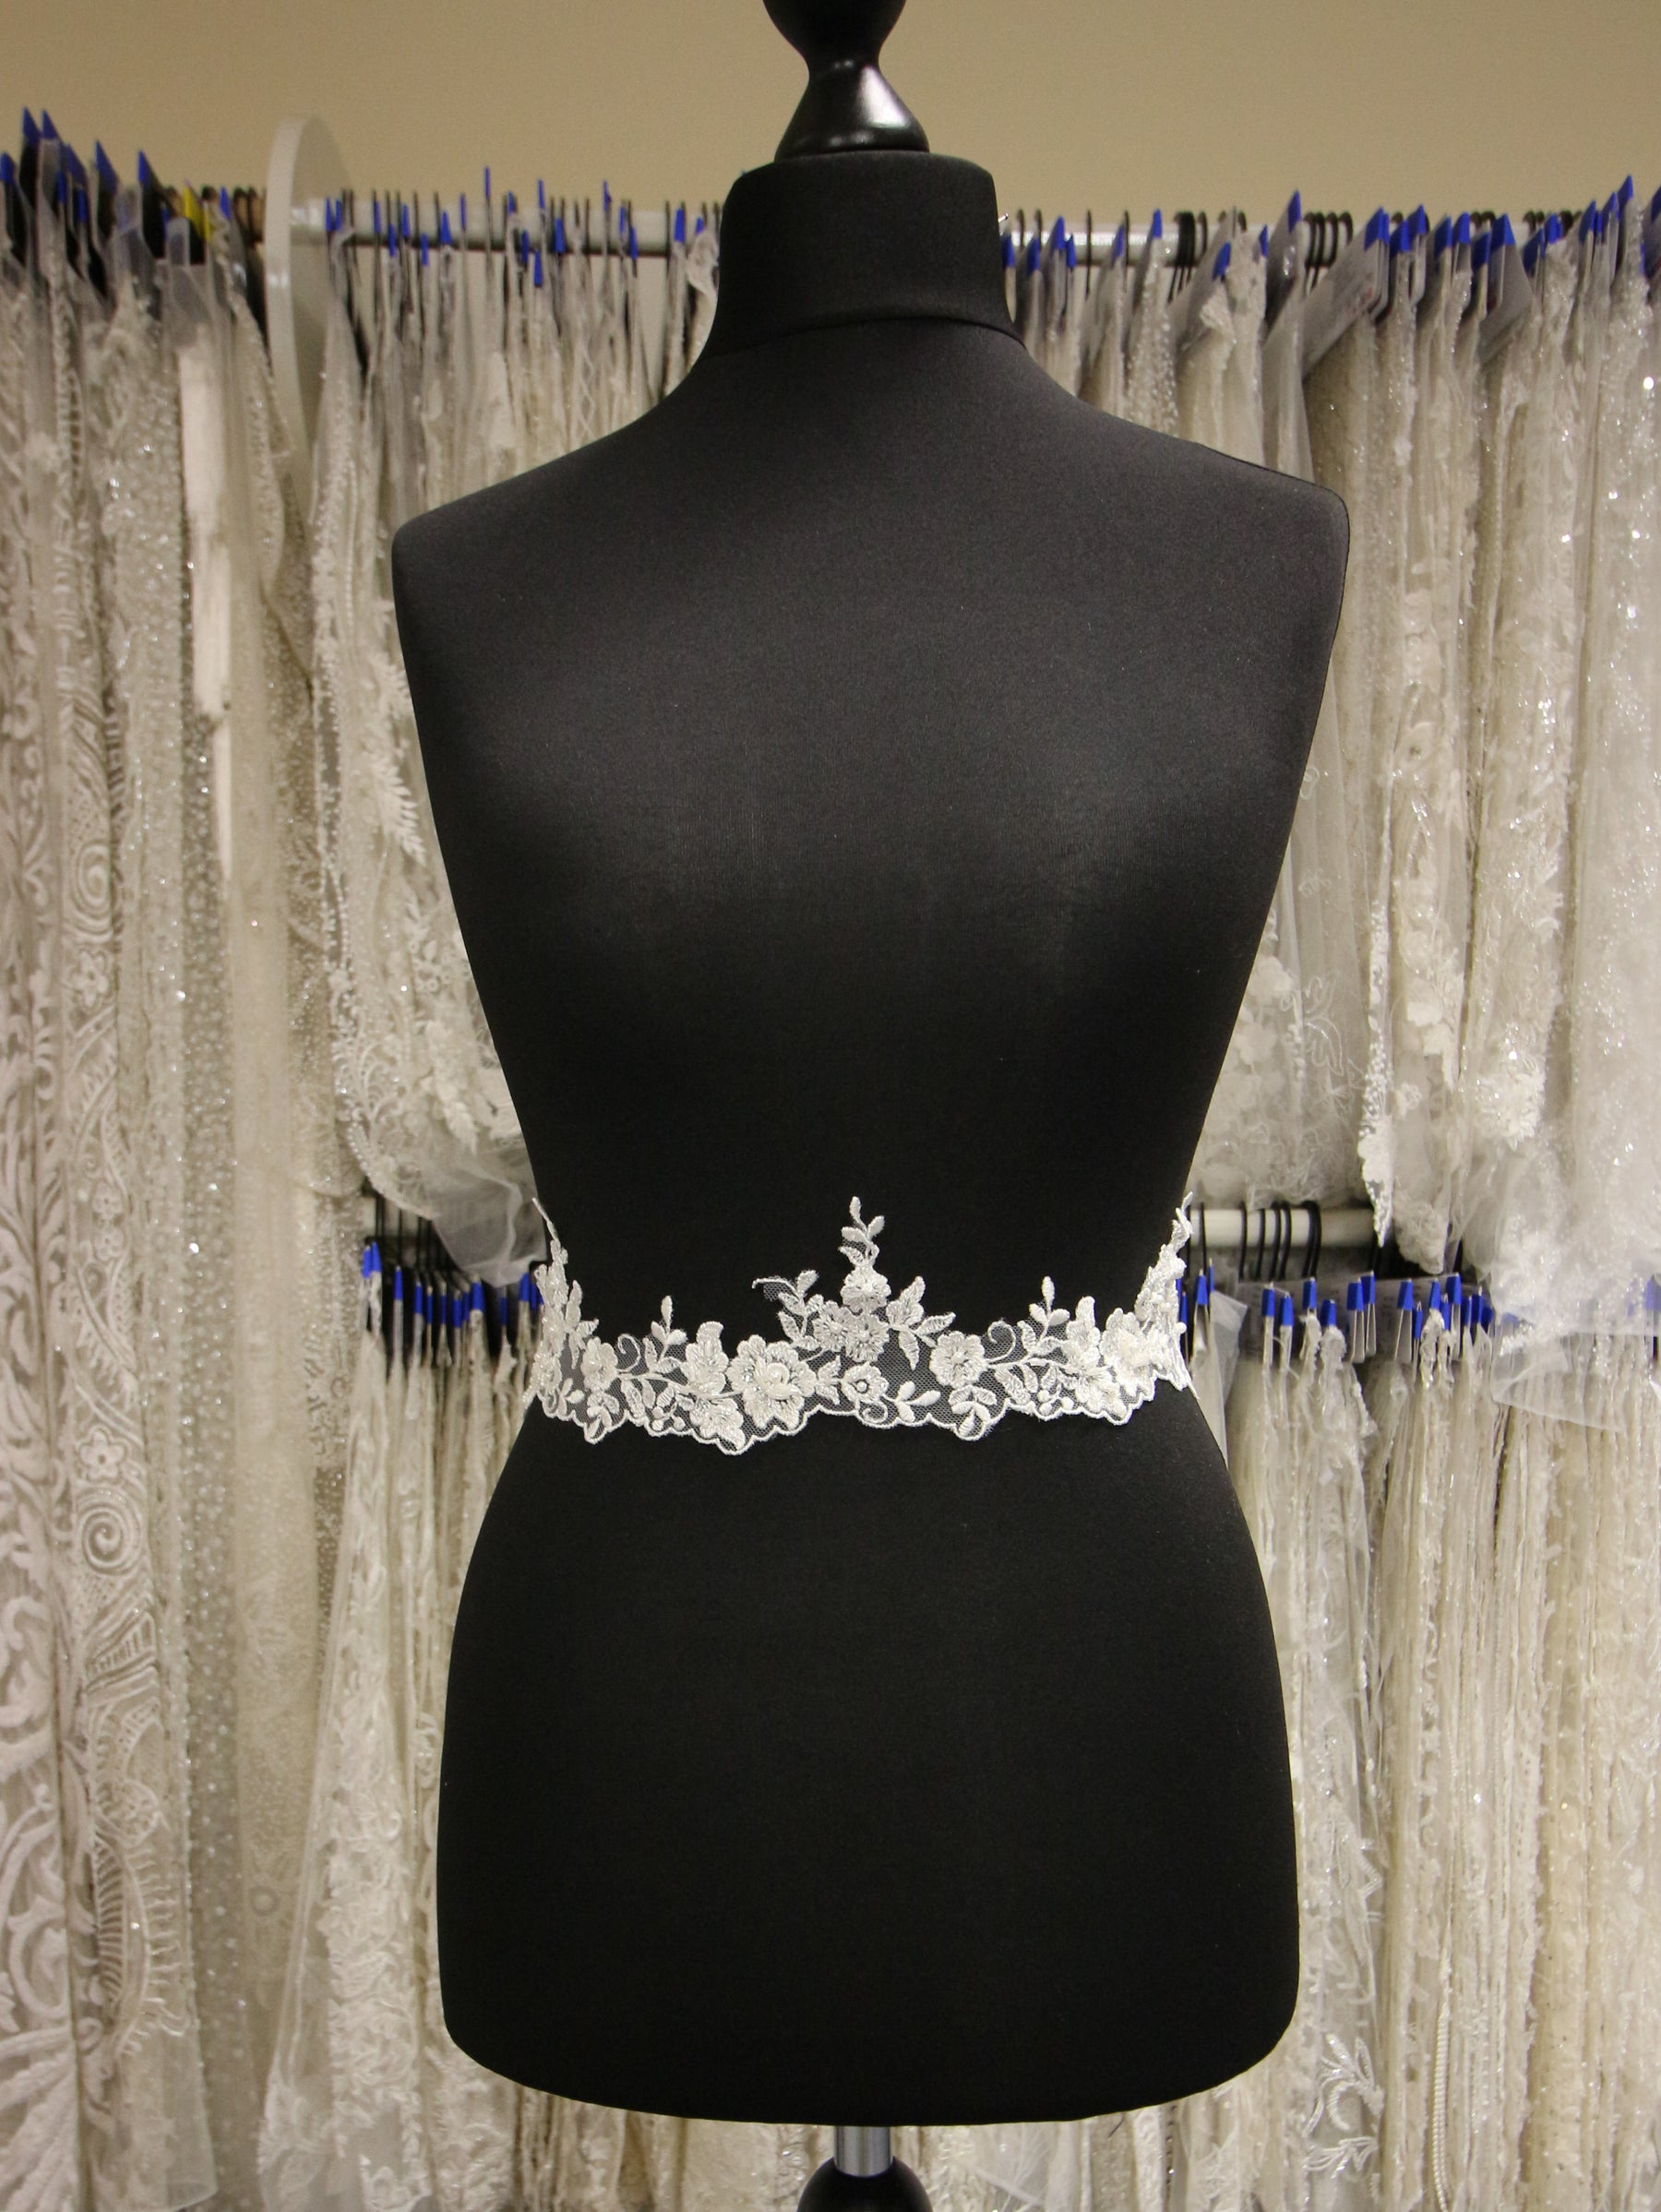 Ivory Lace Soft Stretch 2.5/6.5 cm Bridal Sew Lingerie Trim – The Lace Co.